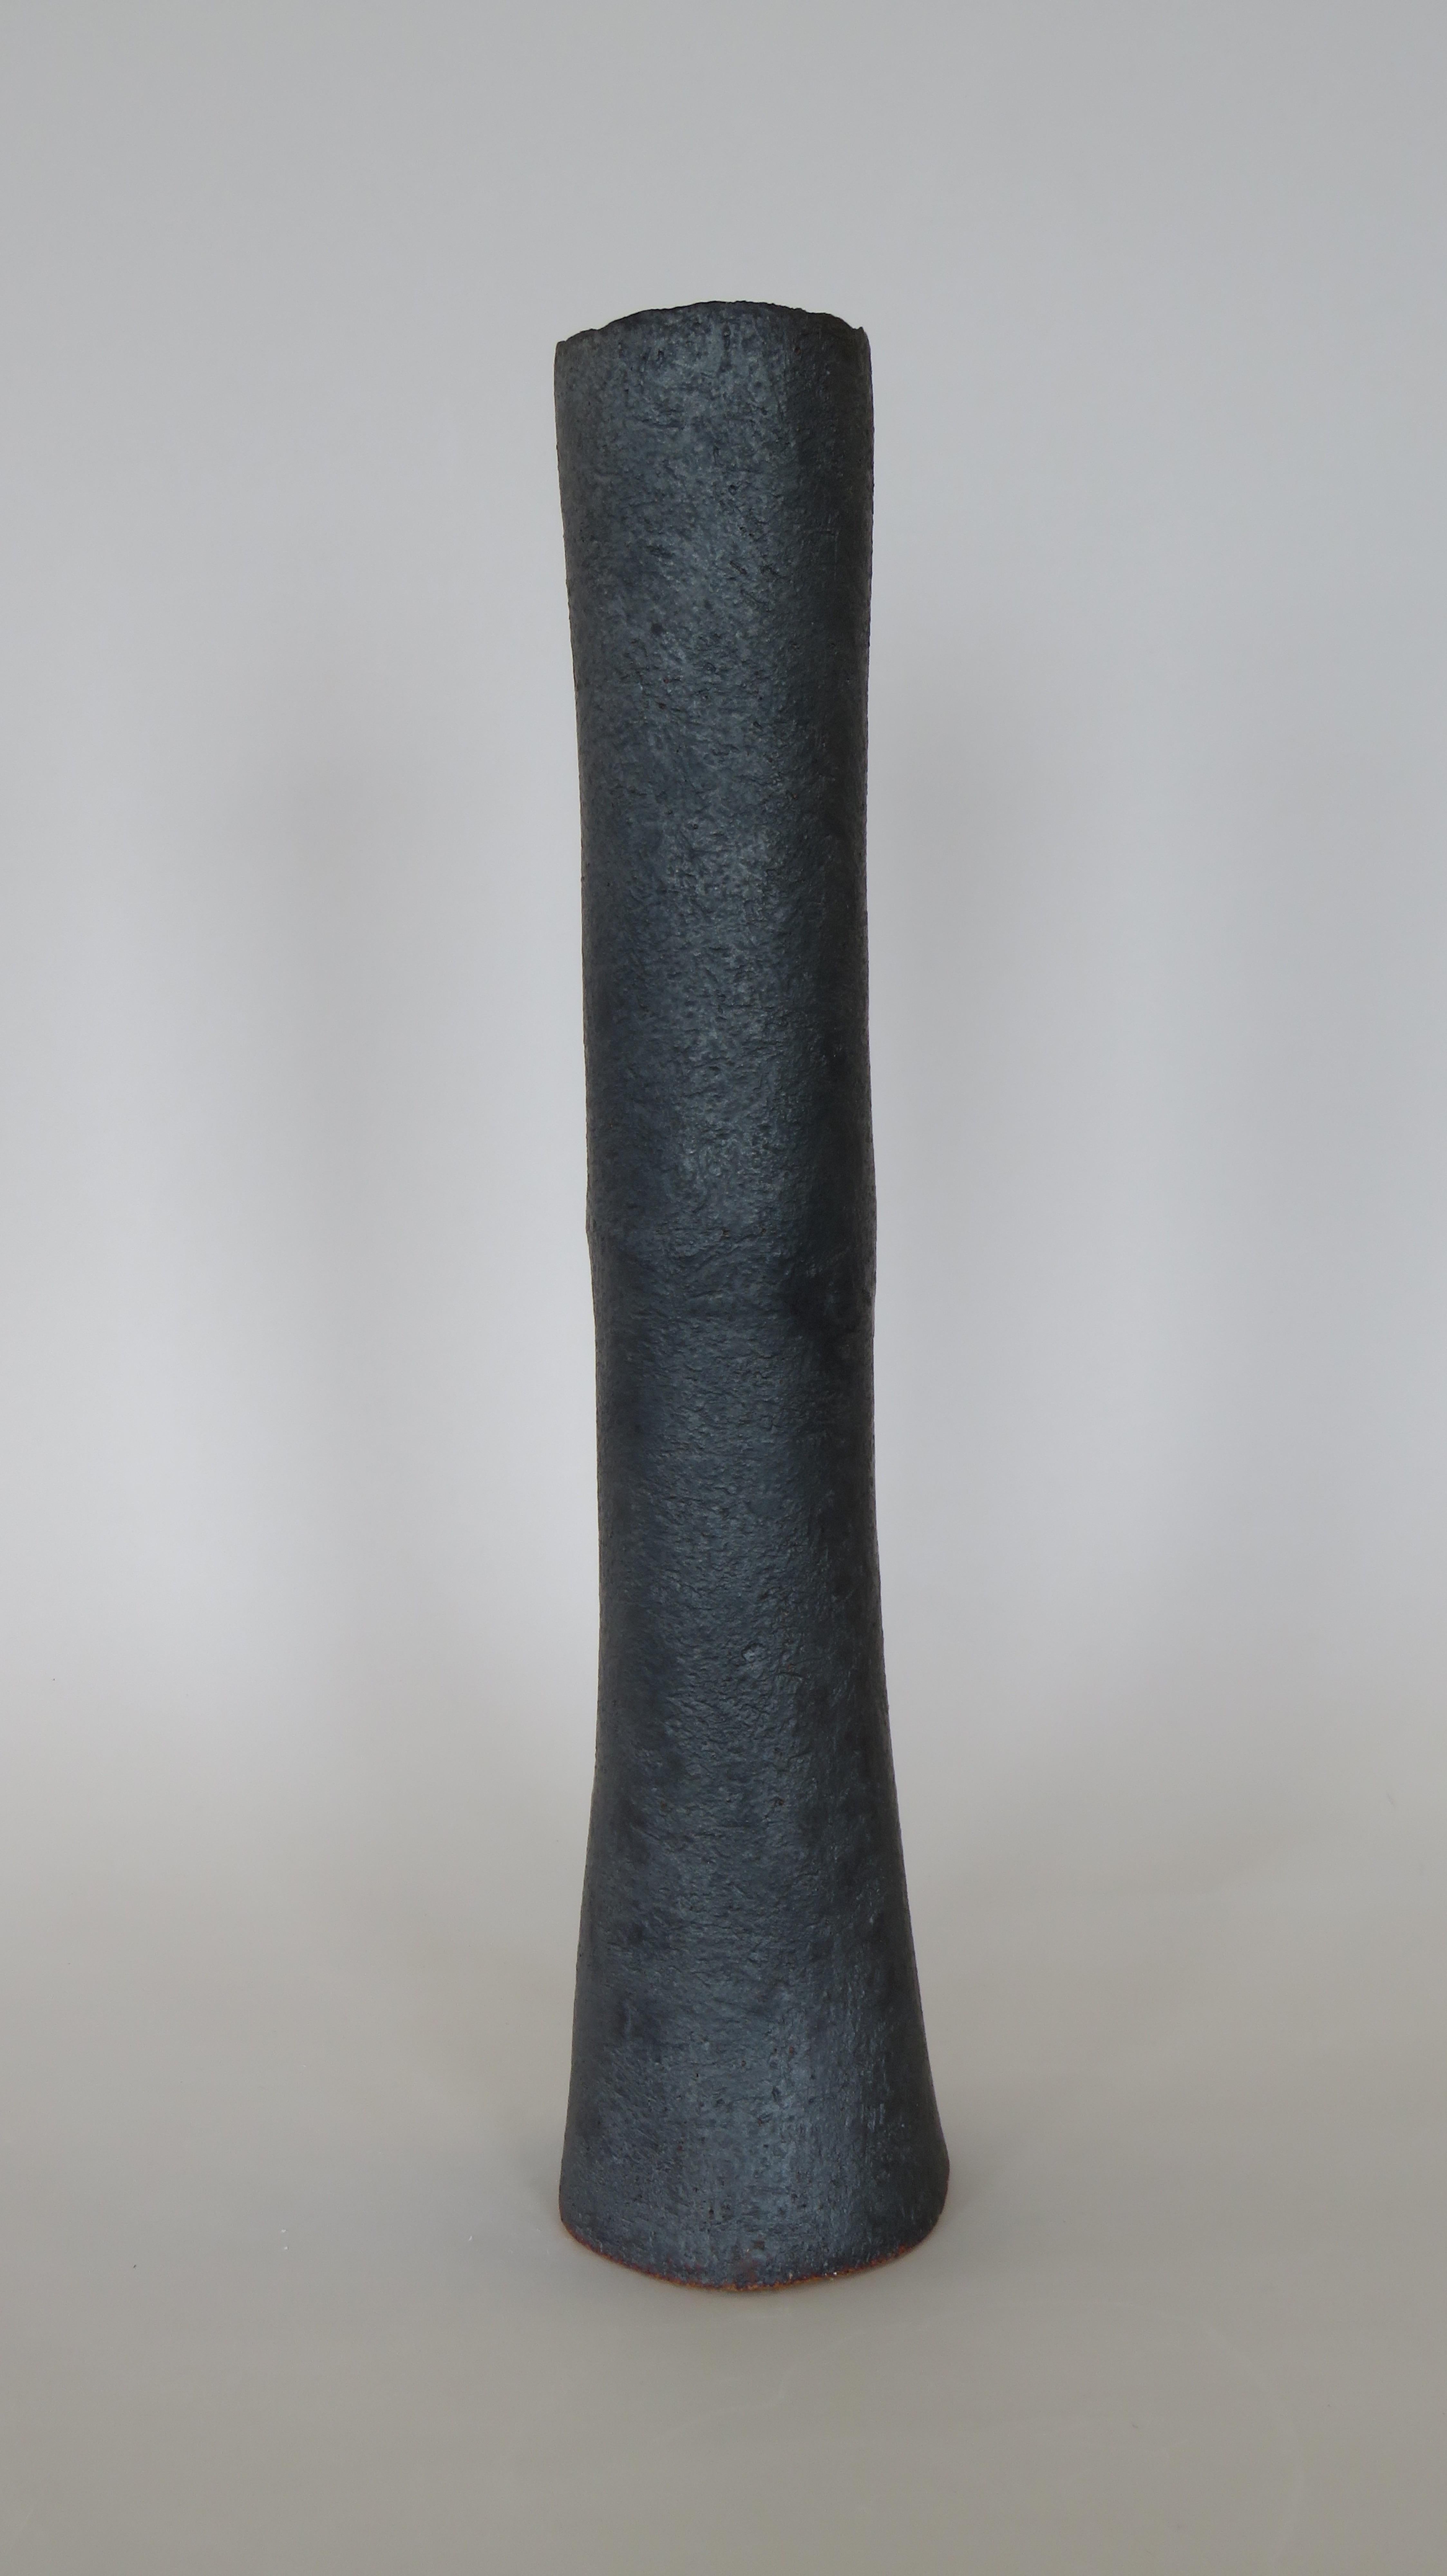 Organic Modern Tall Tubular Metallic Black Stoneware Vase, Hand Built, 17.5 Inches Tall